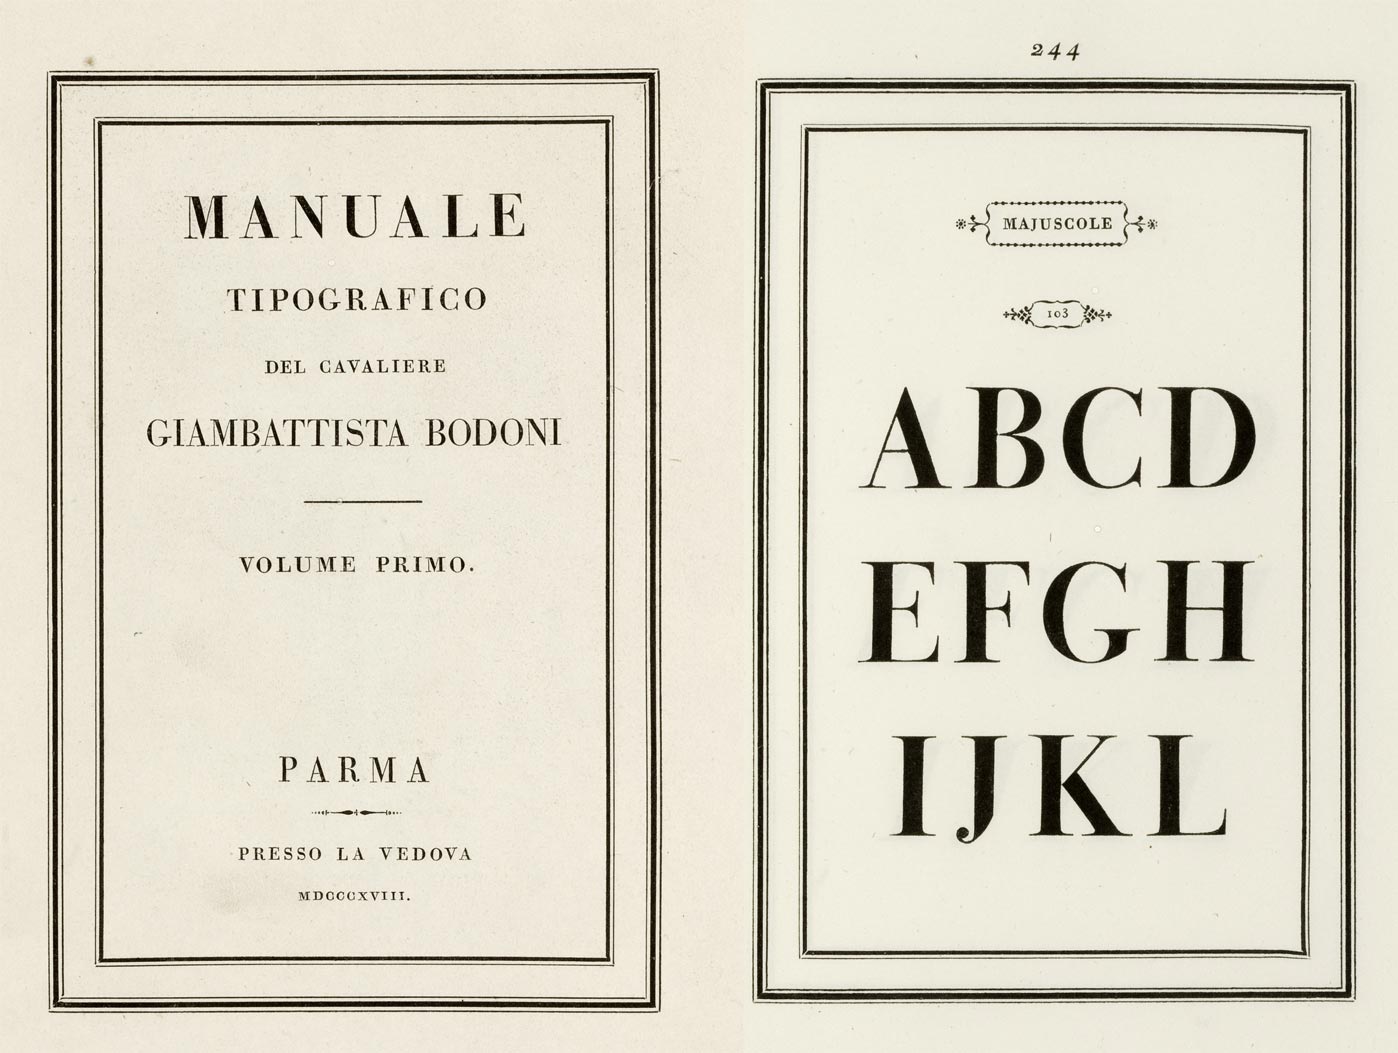 Manuale tipografico (1818) – Giambattista Bodoni